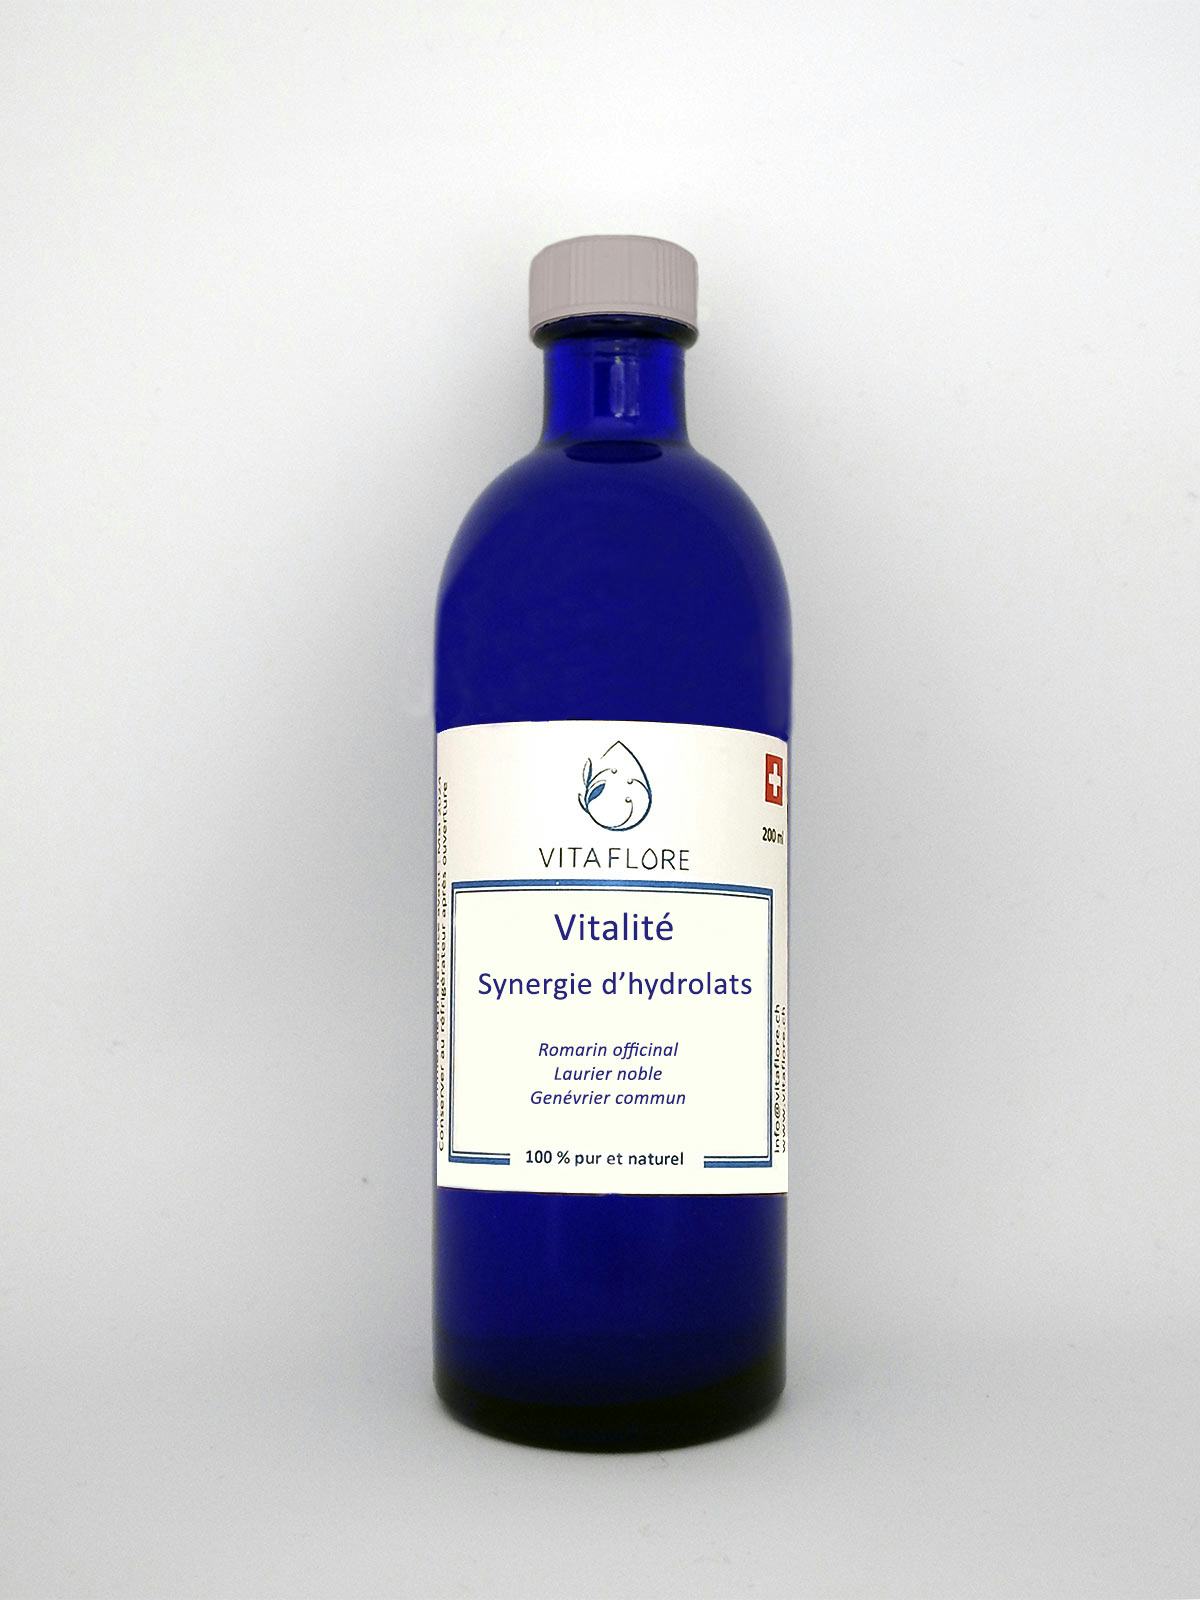 Sinergia di idrolati – Vitalità, Vitaflore, Grimisuat, image 1 | Mimelis